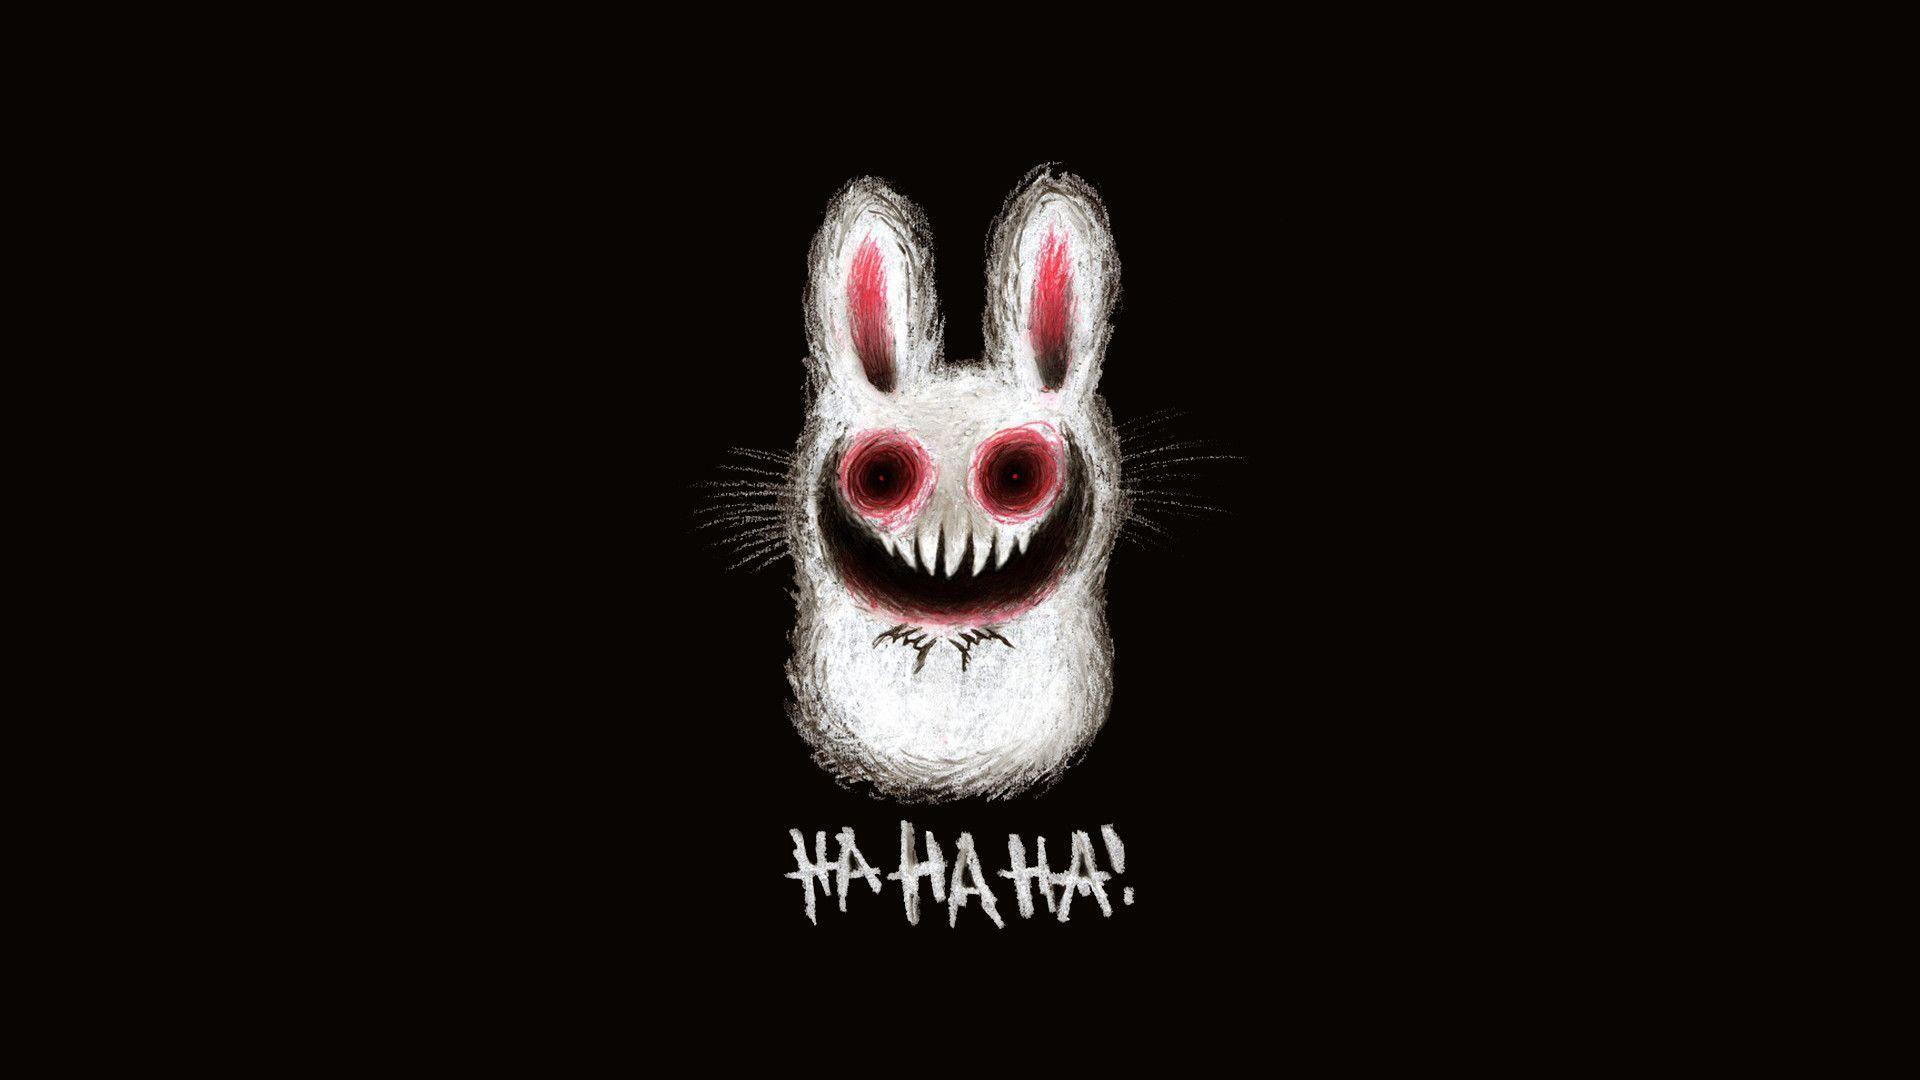 Bad Bunny Digital Download Yonaguni Anime Cartoon Image PNG - Etsy